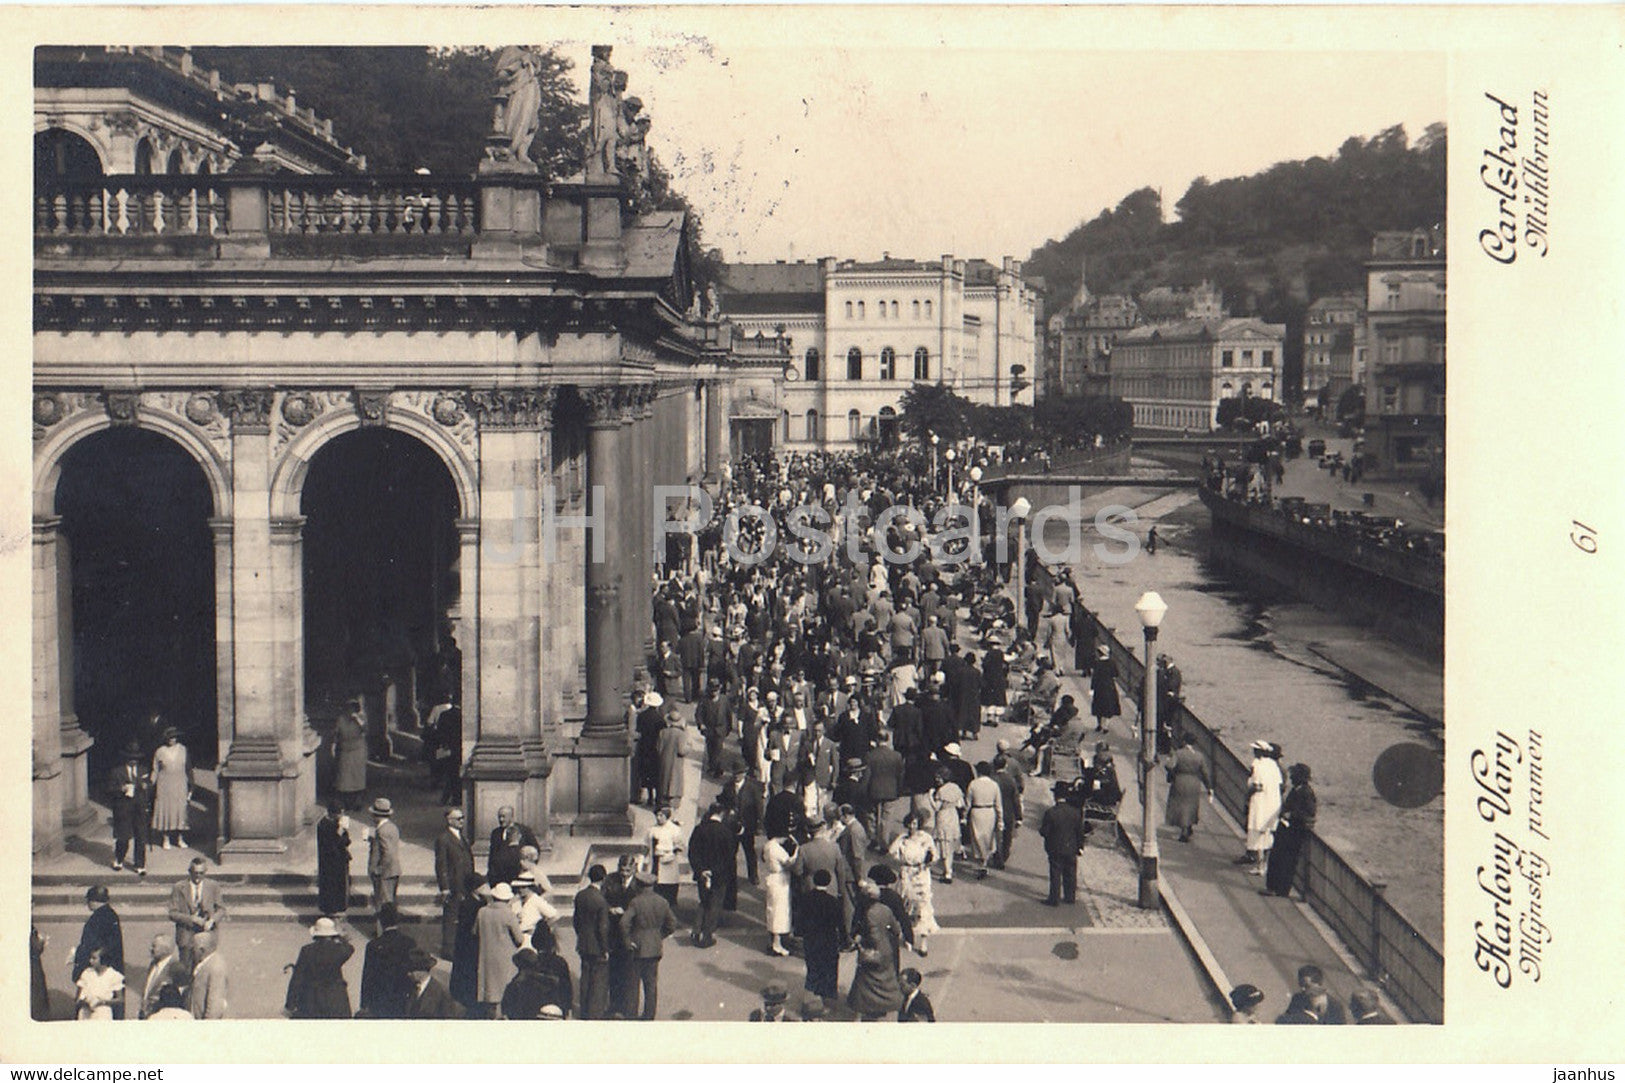 Karlovy Vary - Karlsbad - Mlynsky Pramen - Muhlbrunn - 61 - old postcard - 1936 - Czechoslovakia - Czech Republic - used - JH Postcards